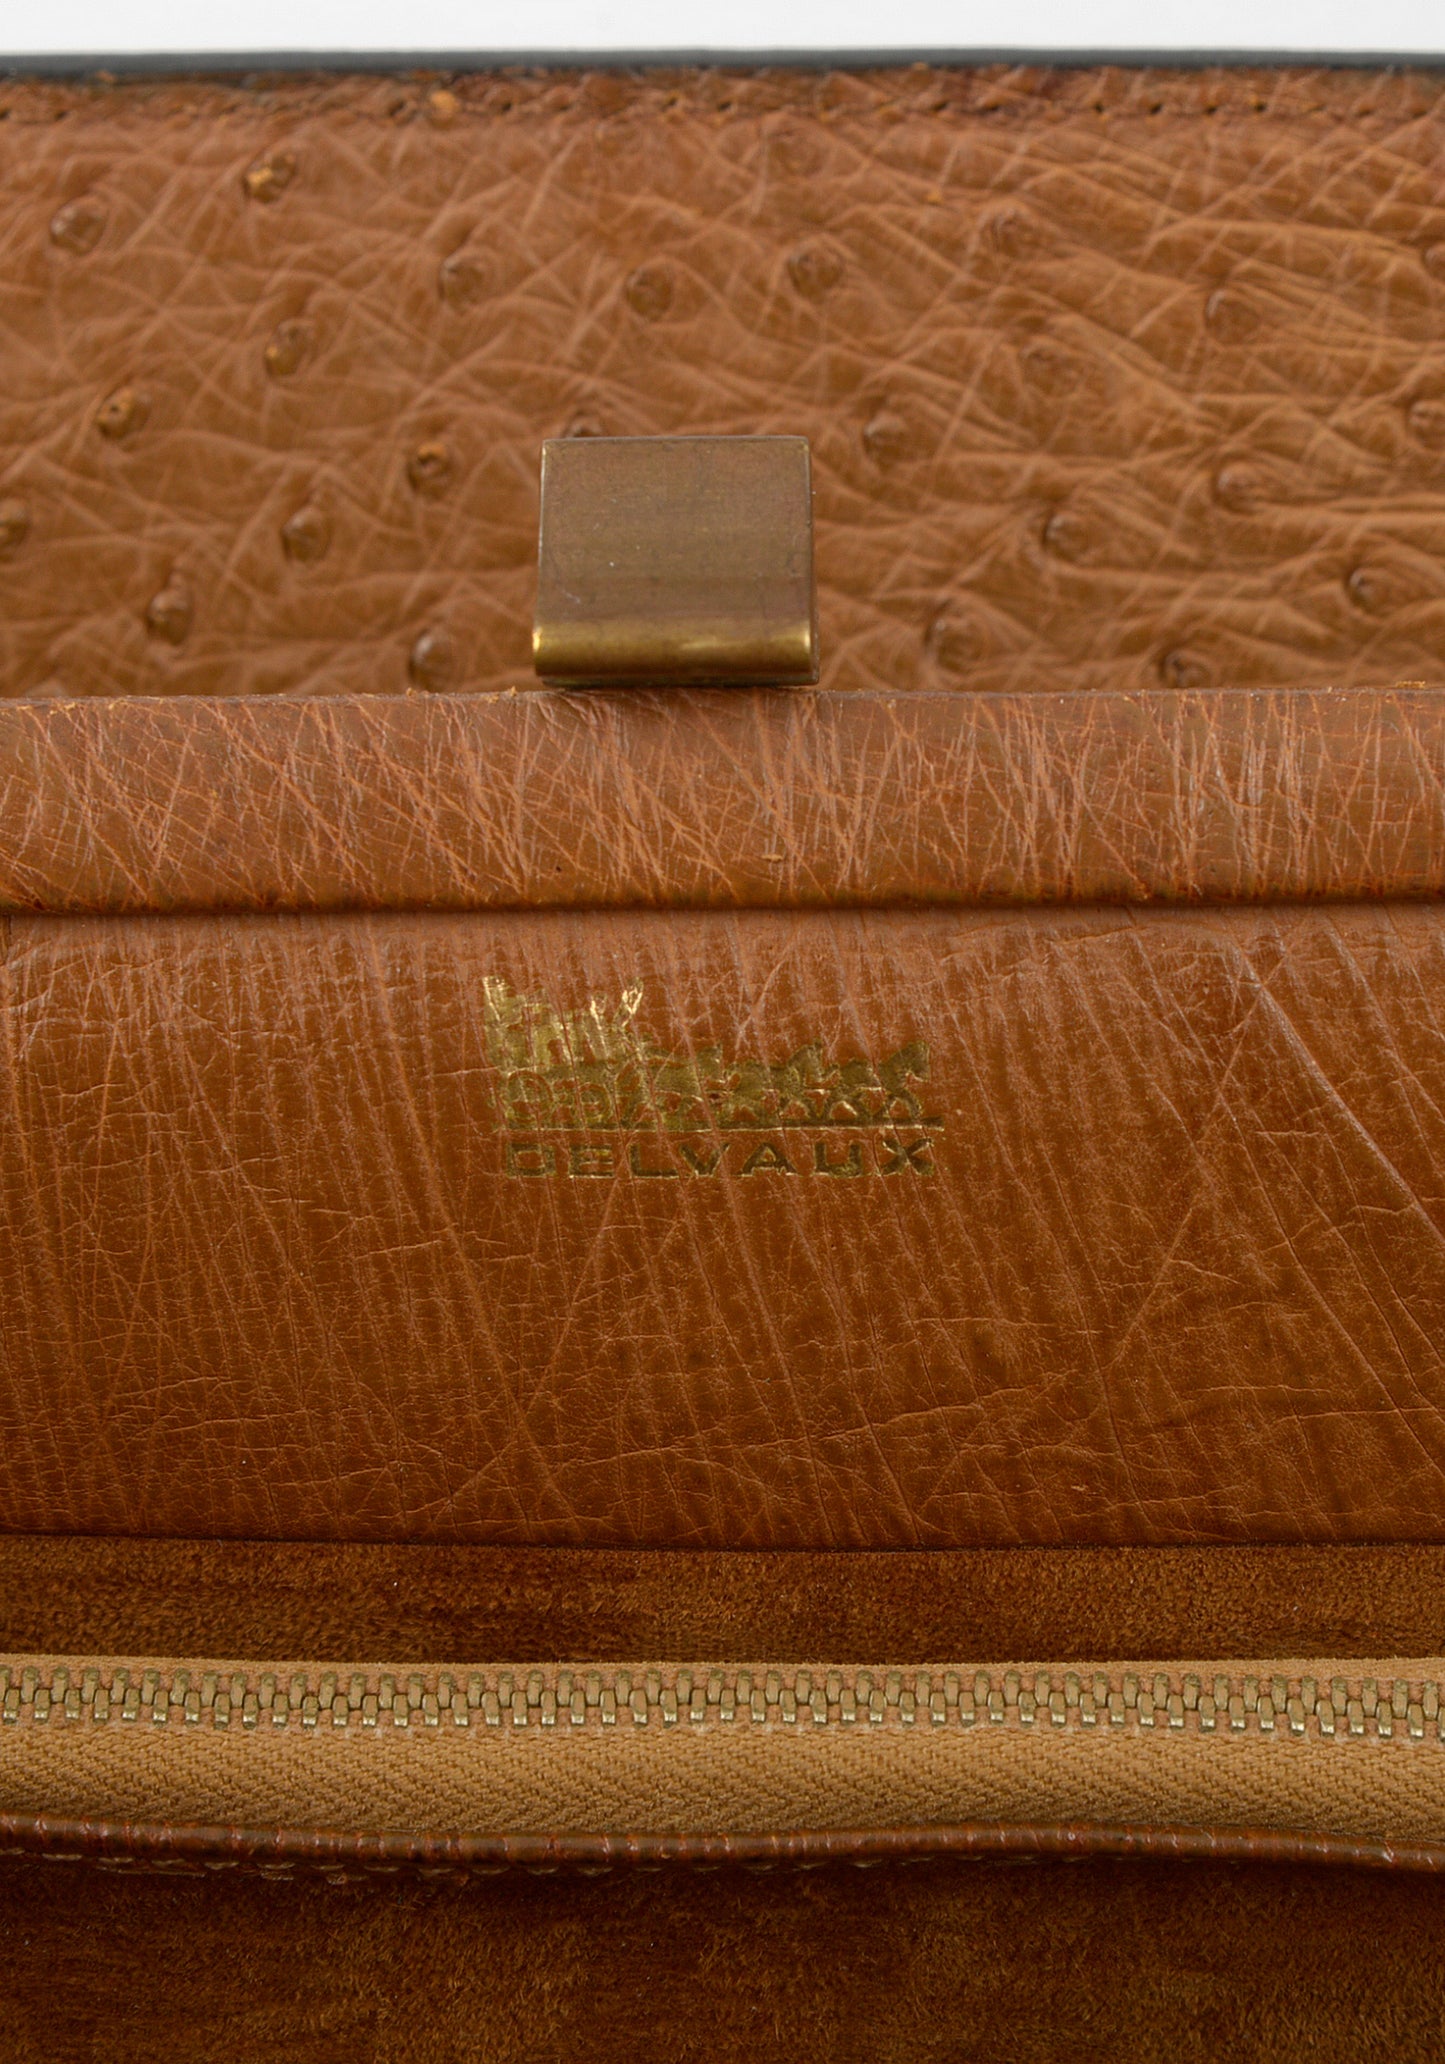 Delvaux vintage top handle handbag in ostrich leather 1966